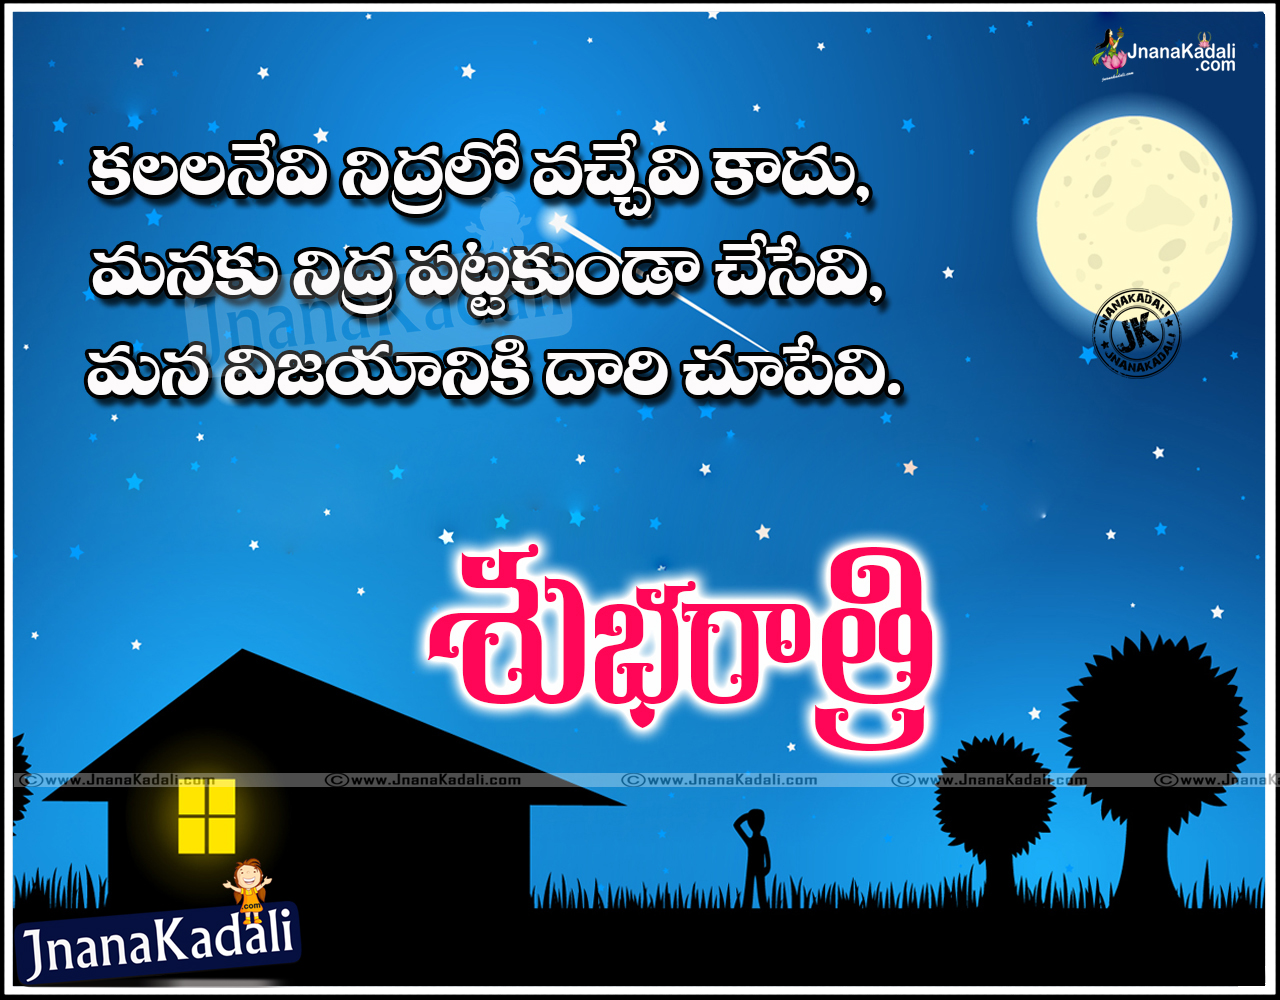 Best Telugu Good Night Greetings for friends | JNANA KADALI.COM ...